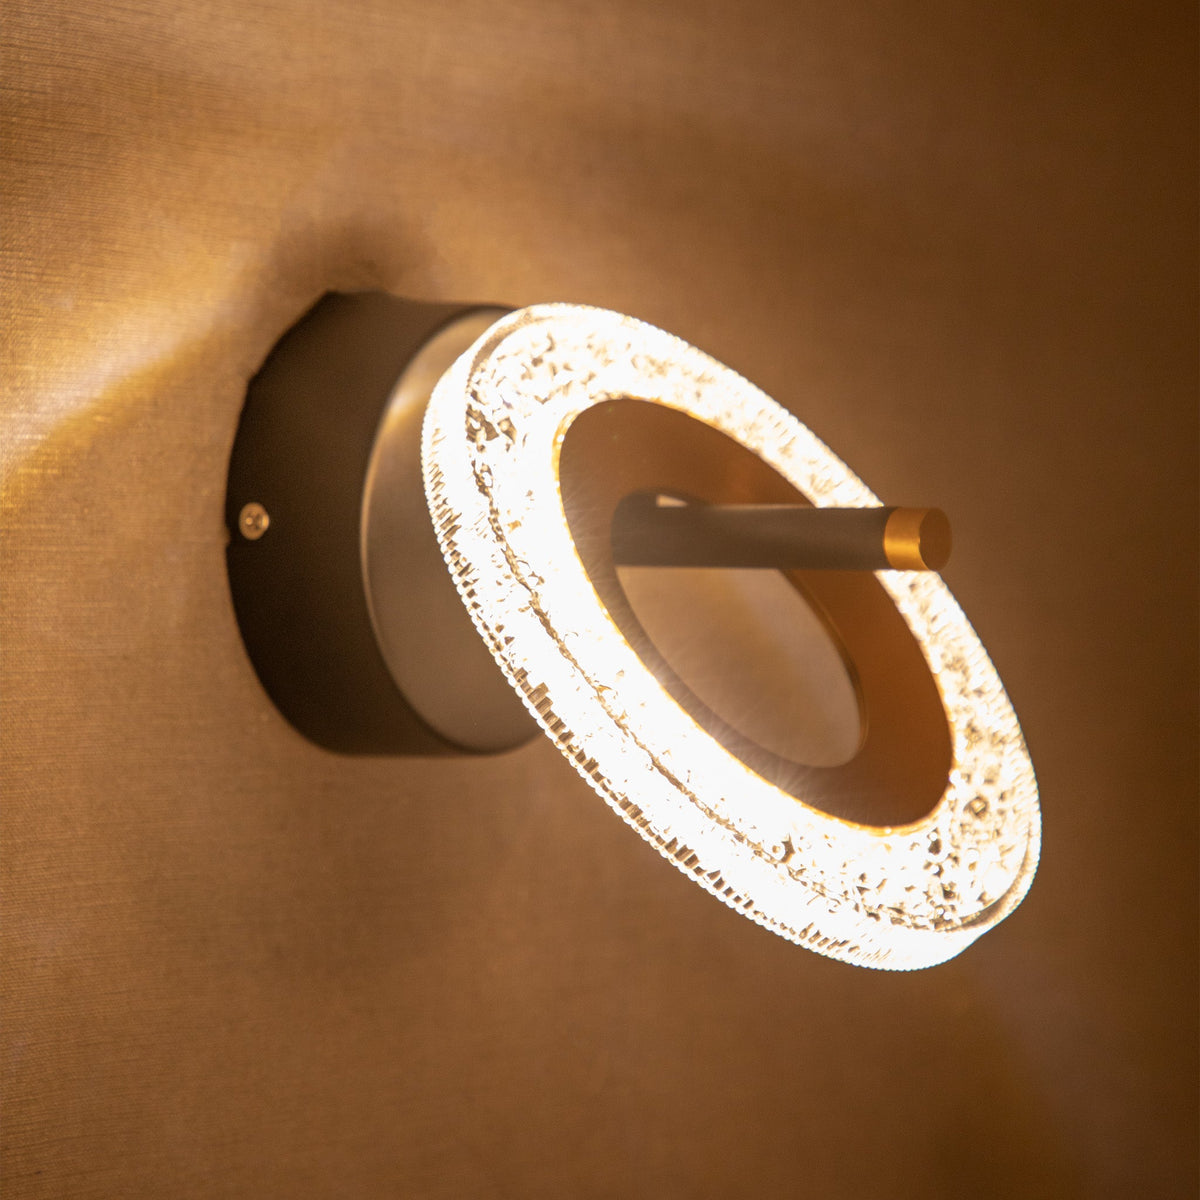 Buy Find Me LED Wall Light online modern lamp